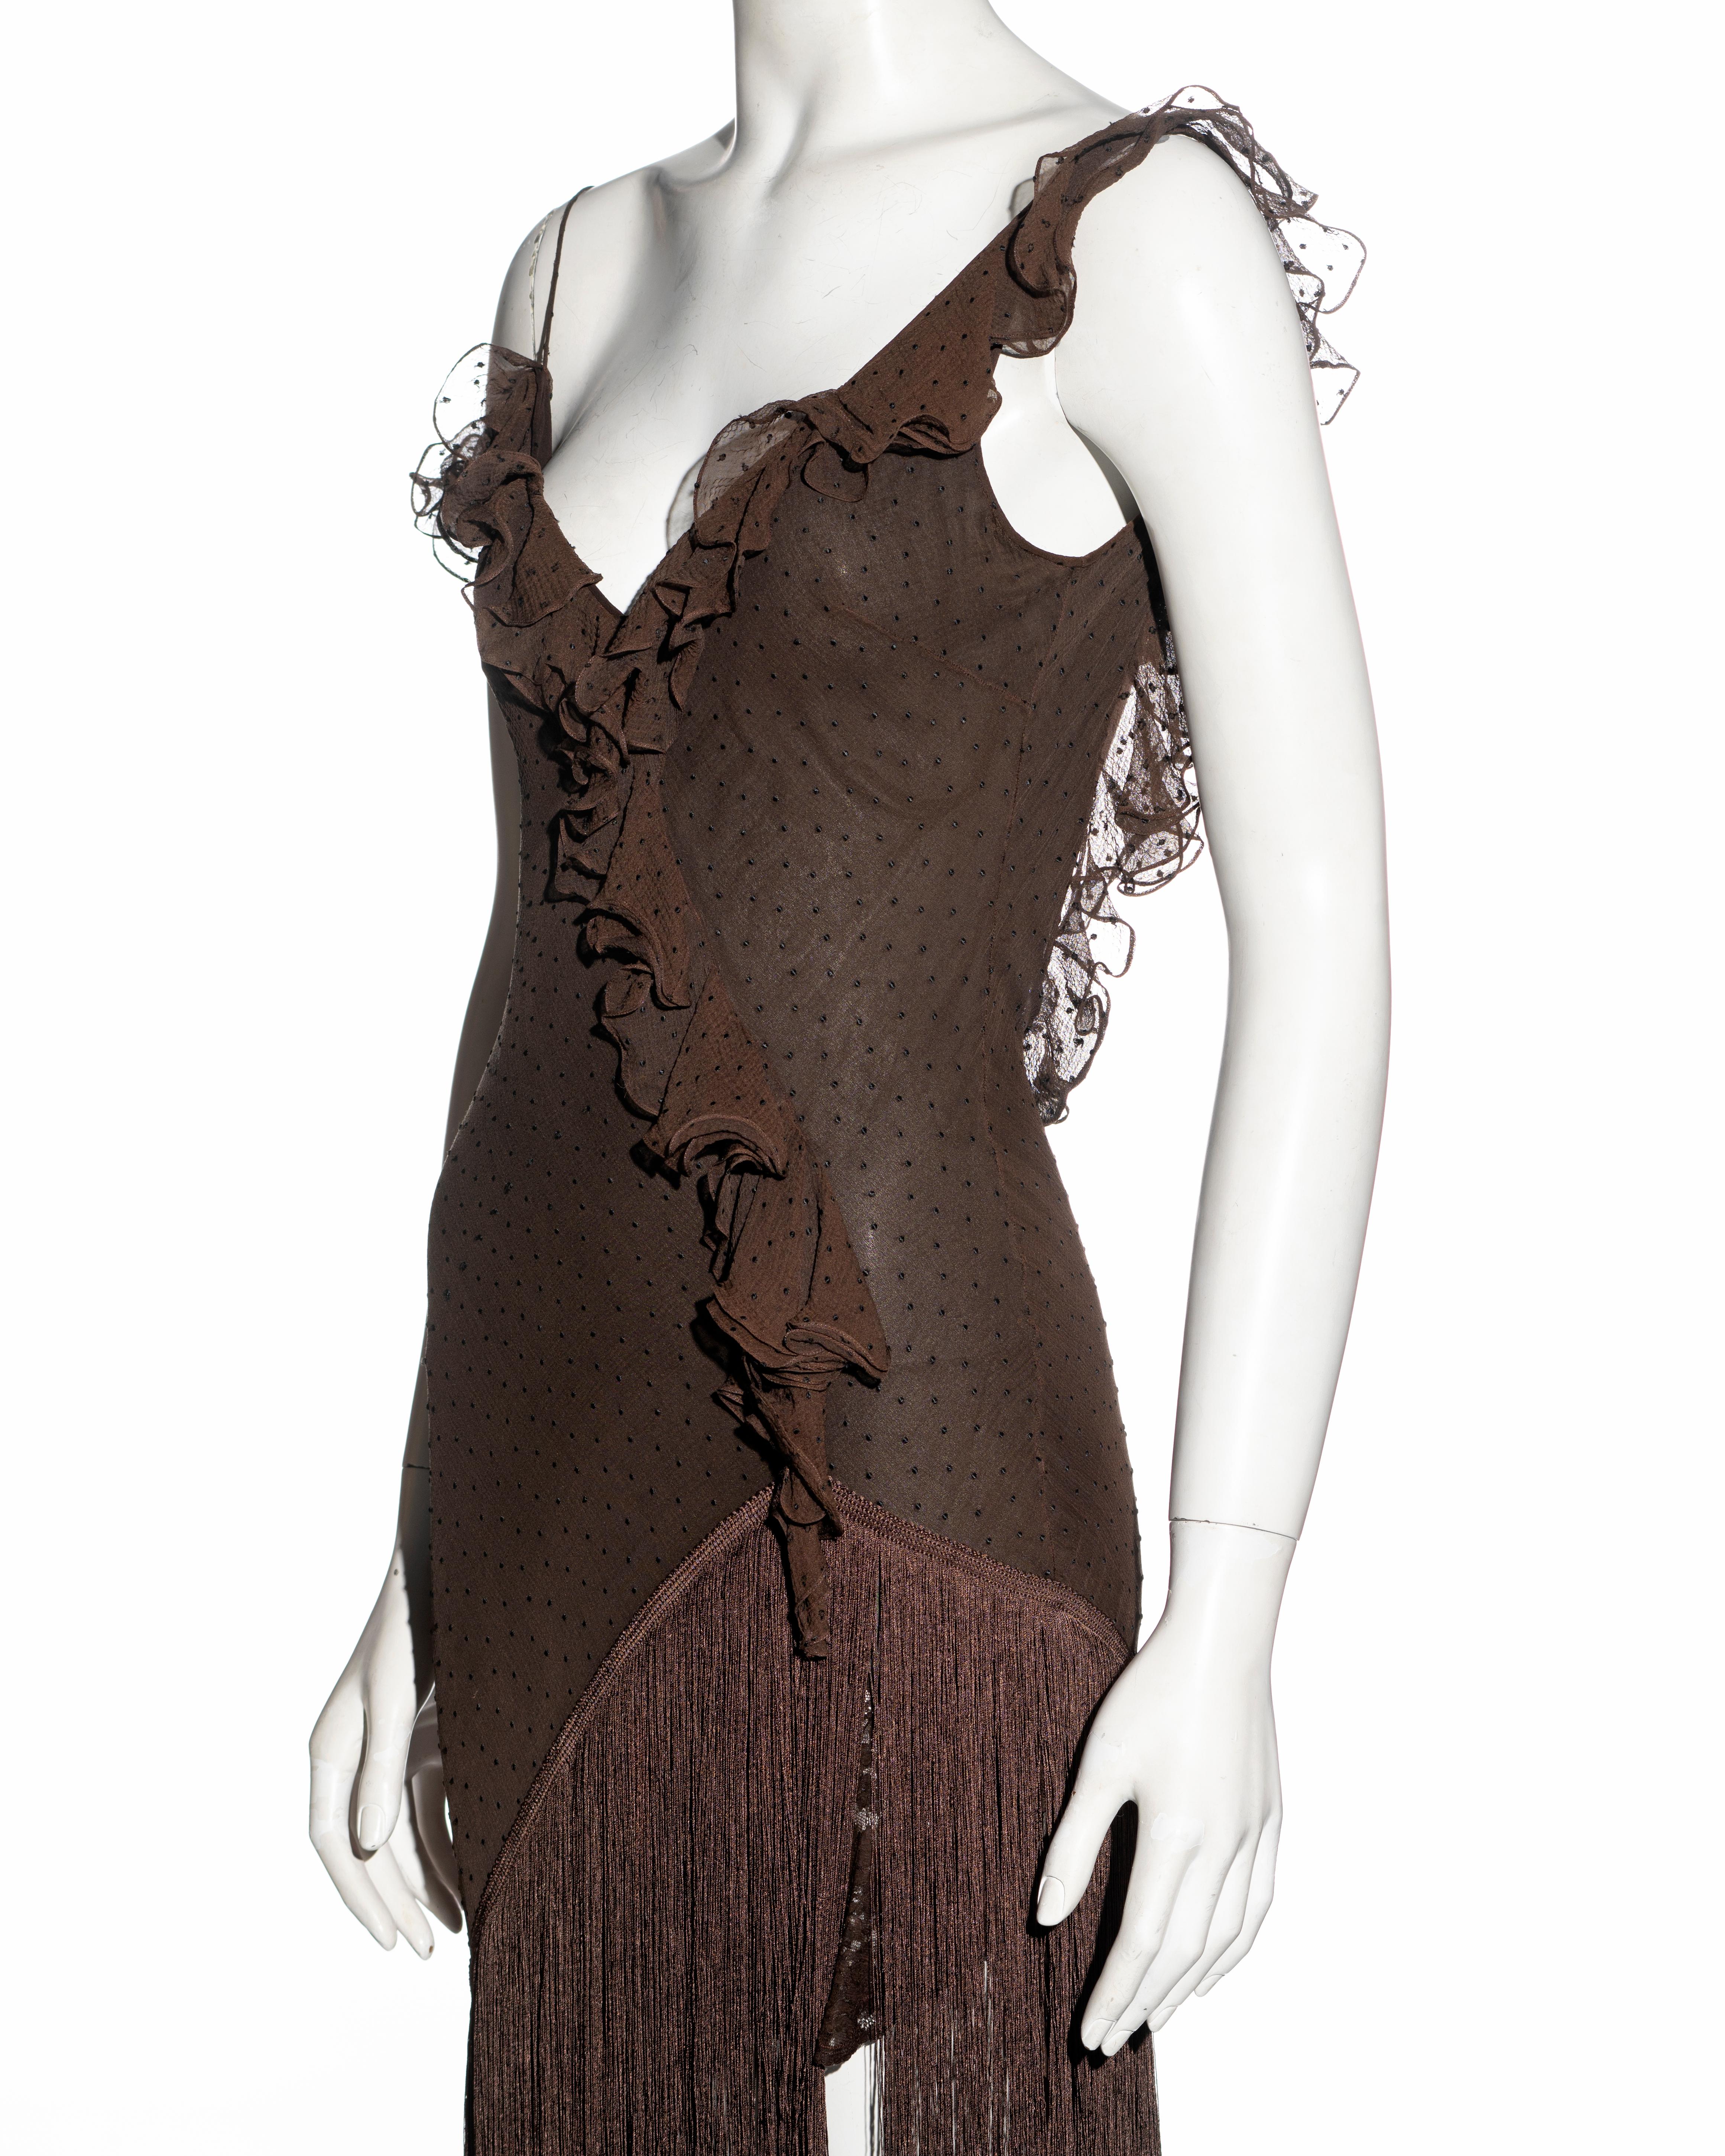 Christian Dior by John Galliano brown silk chiffon bias cut dress, fw 2000 3